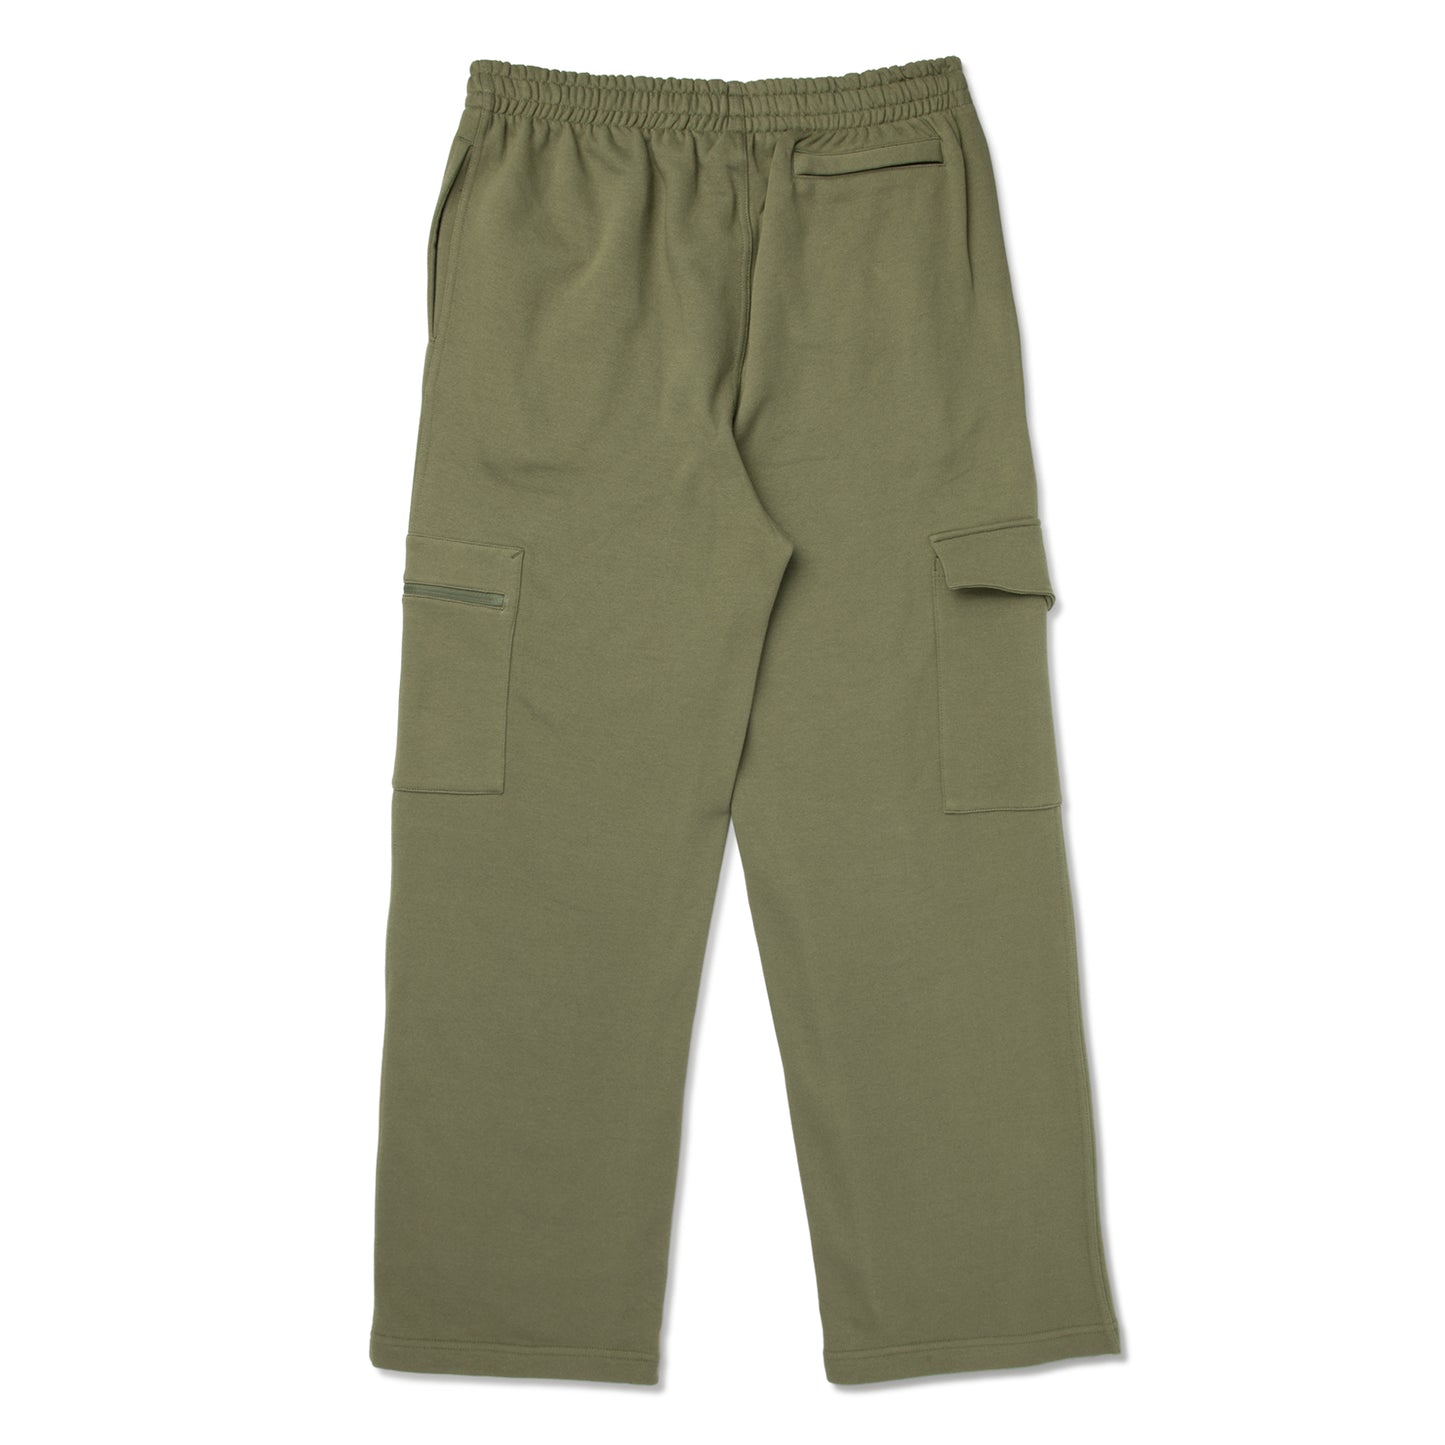 Patta Basic Summer Cargo Jogging Pants (Olive)